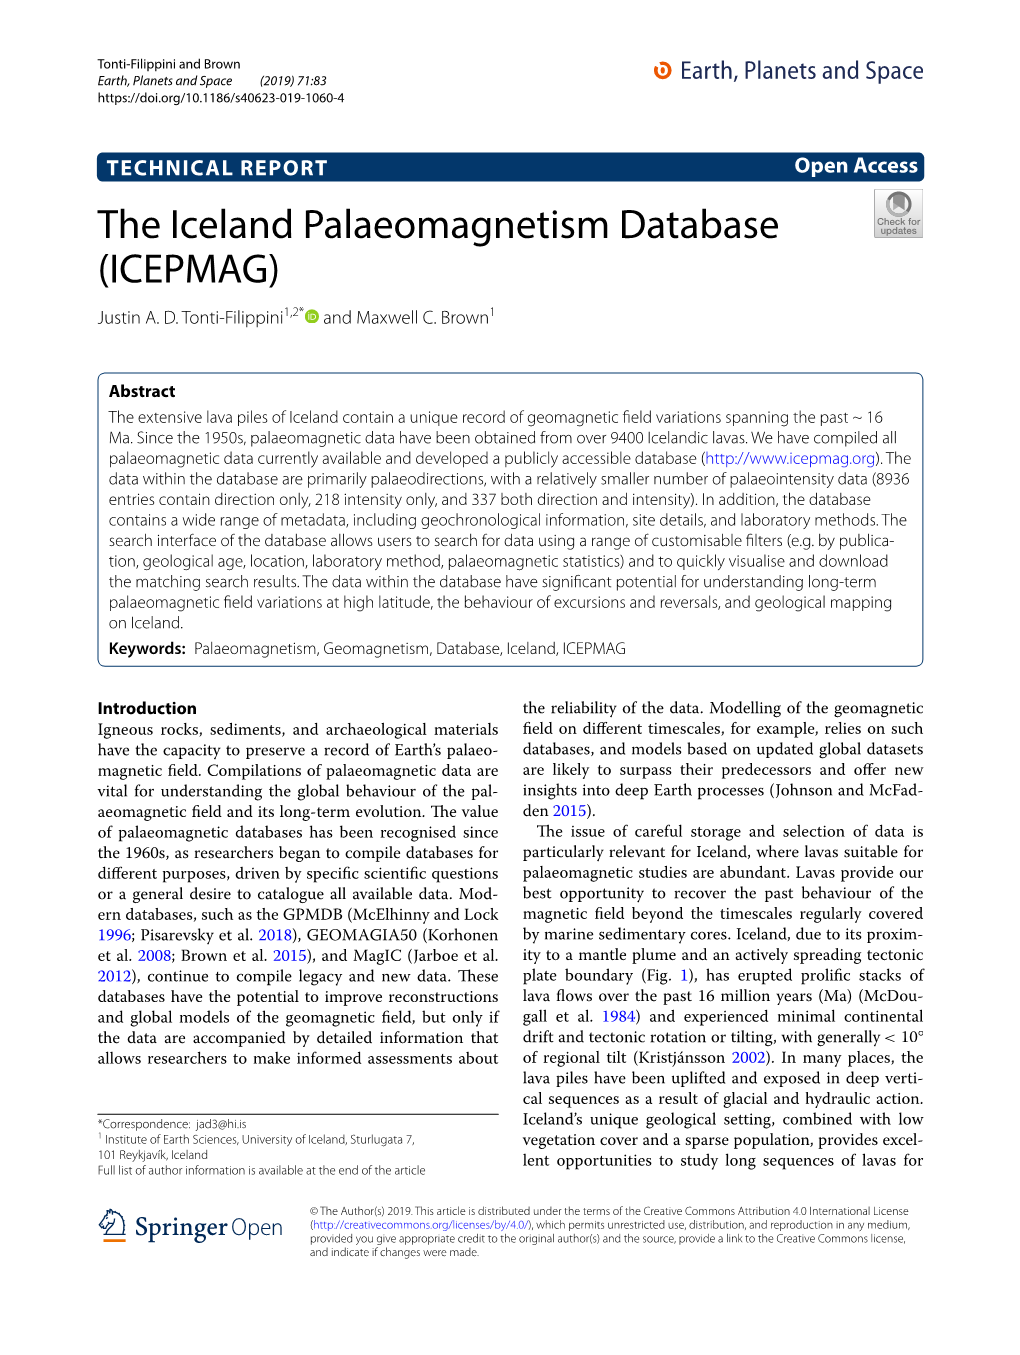 The Iceland Palaeomagnetism Database (ICEPMAG) Justin A